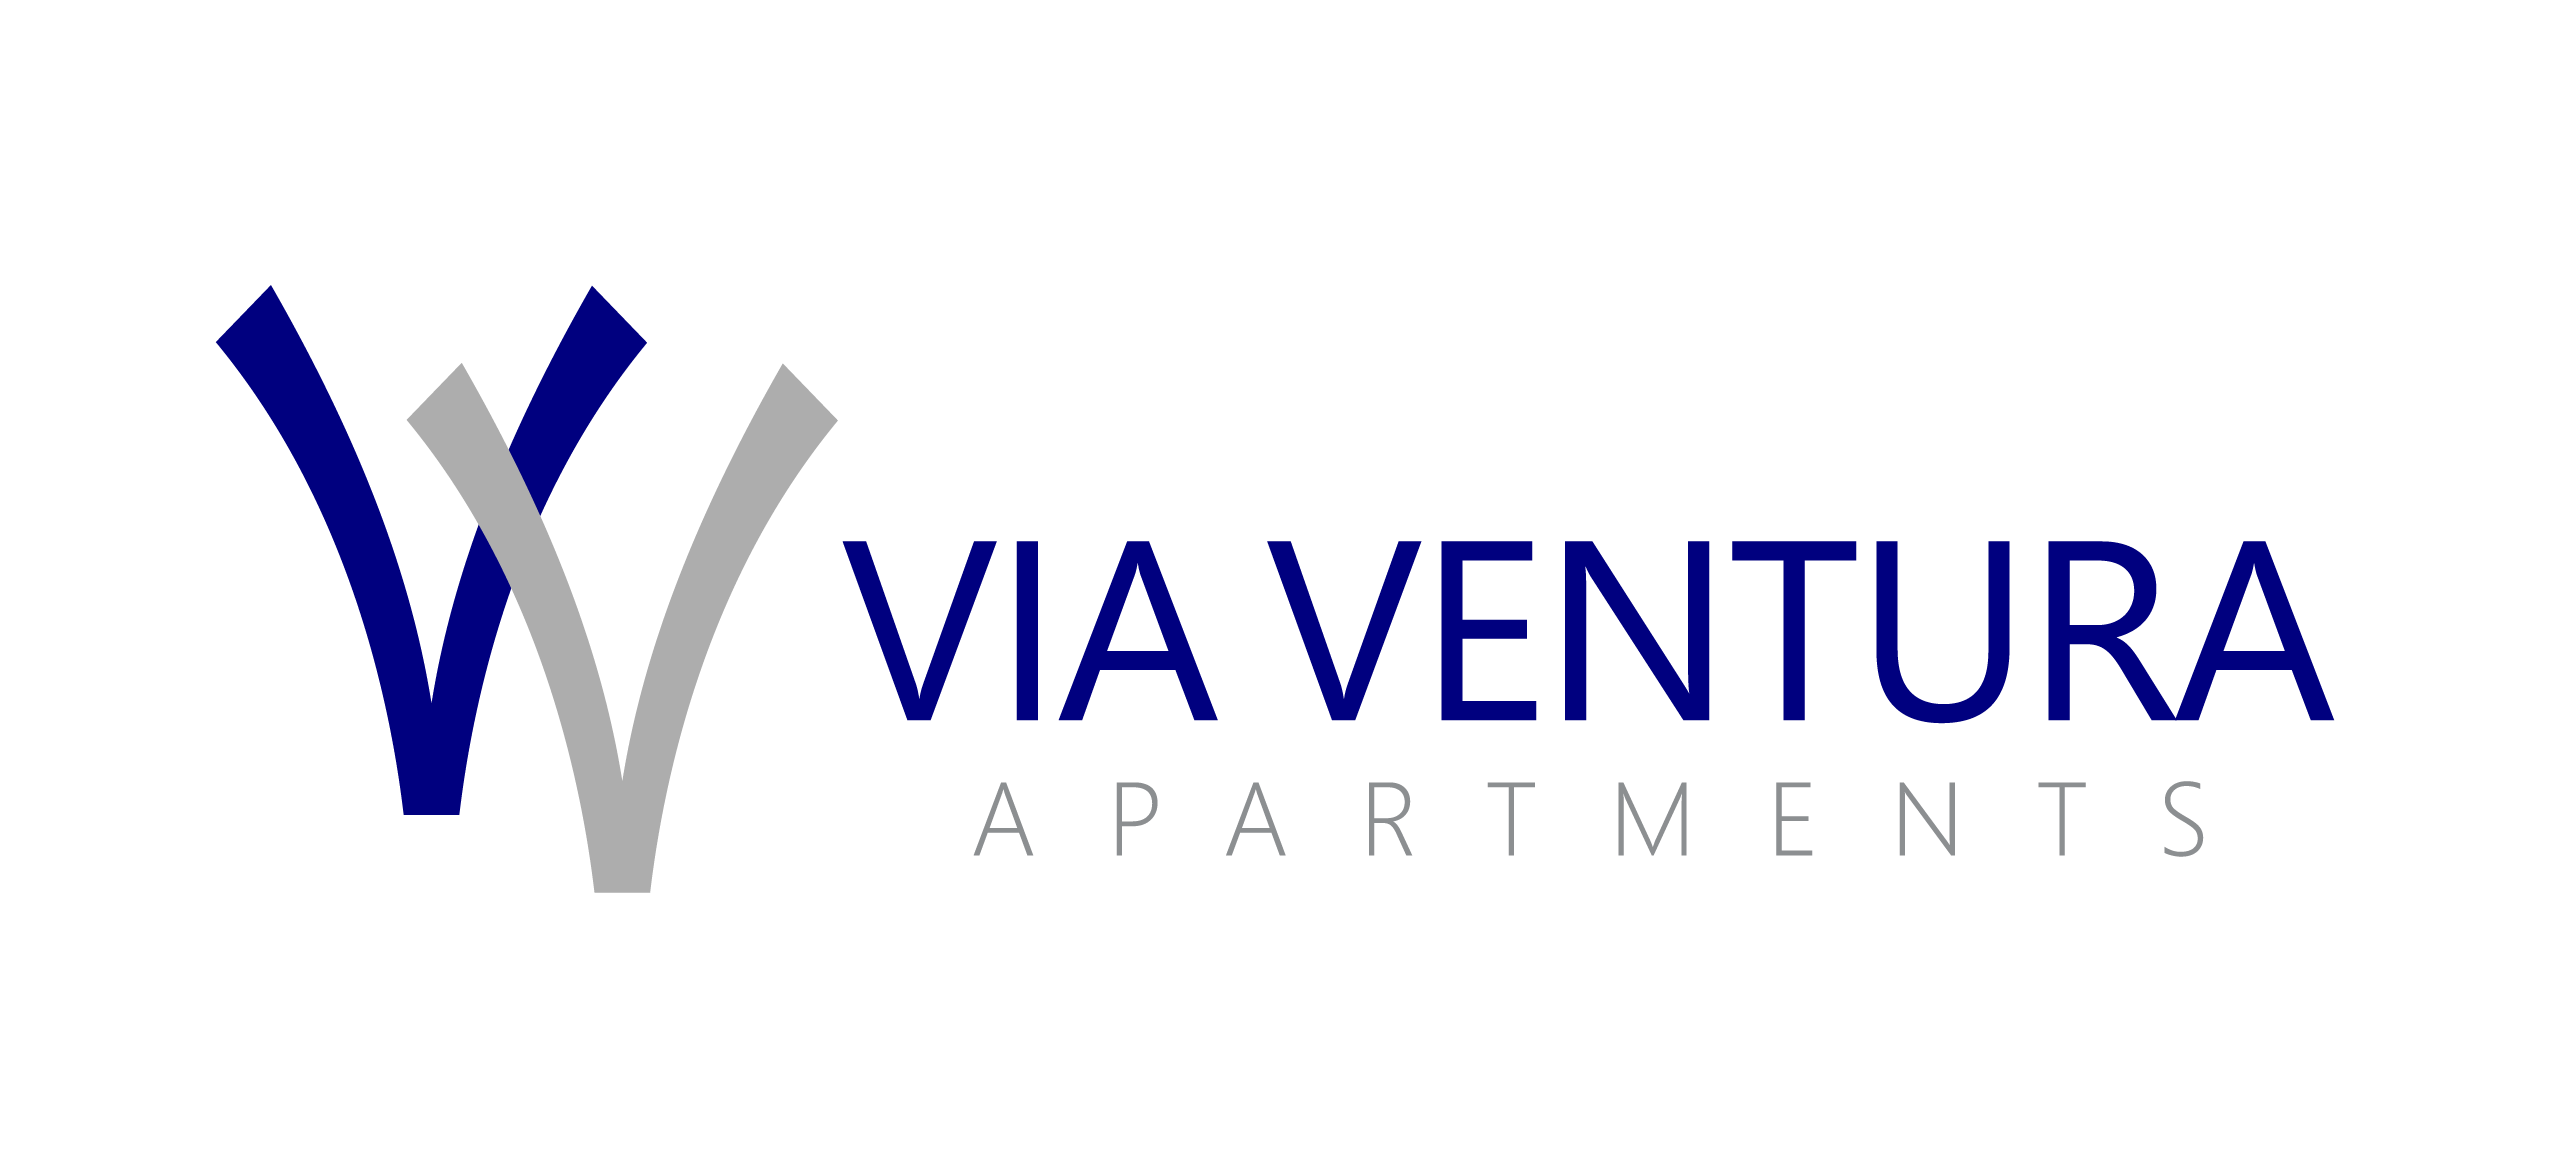 Ventura Logo - Via Ventura Apartments. Apartments in Ventura, CA 93003